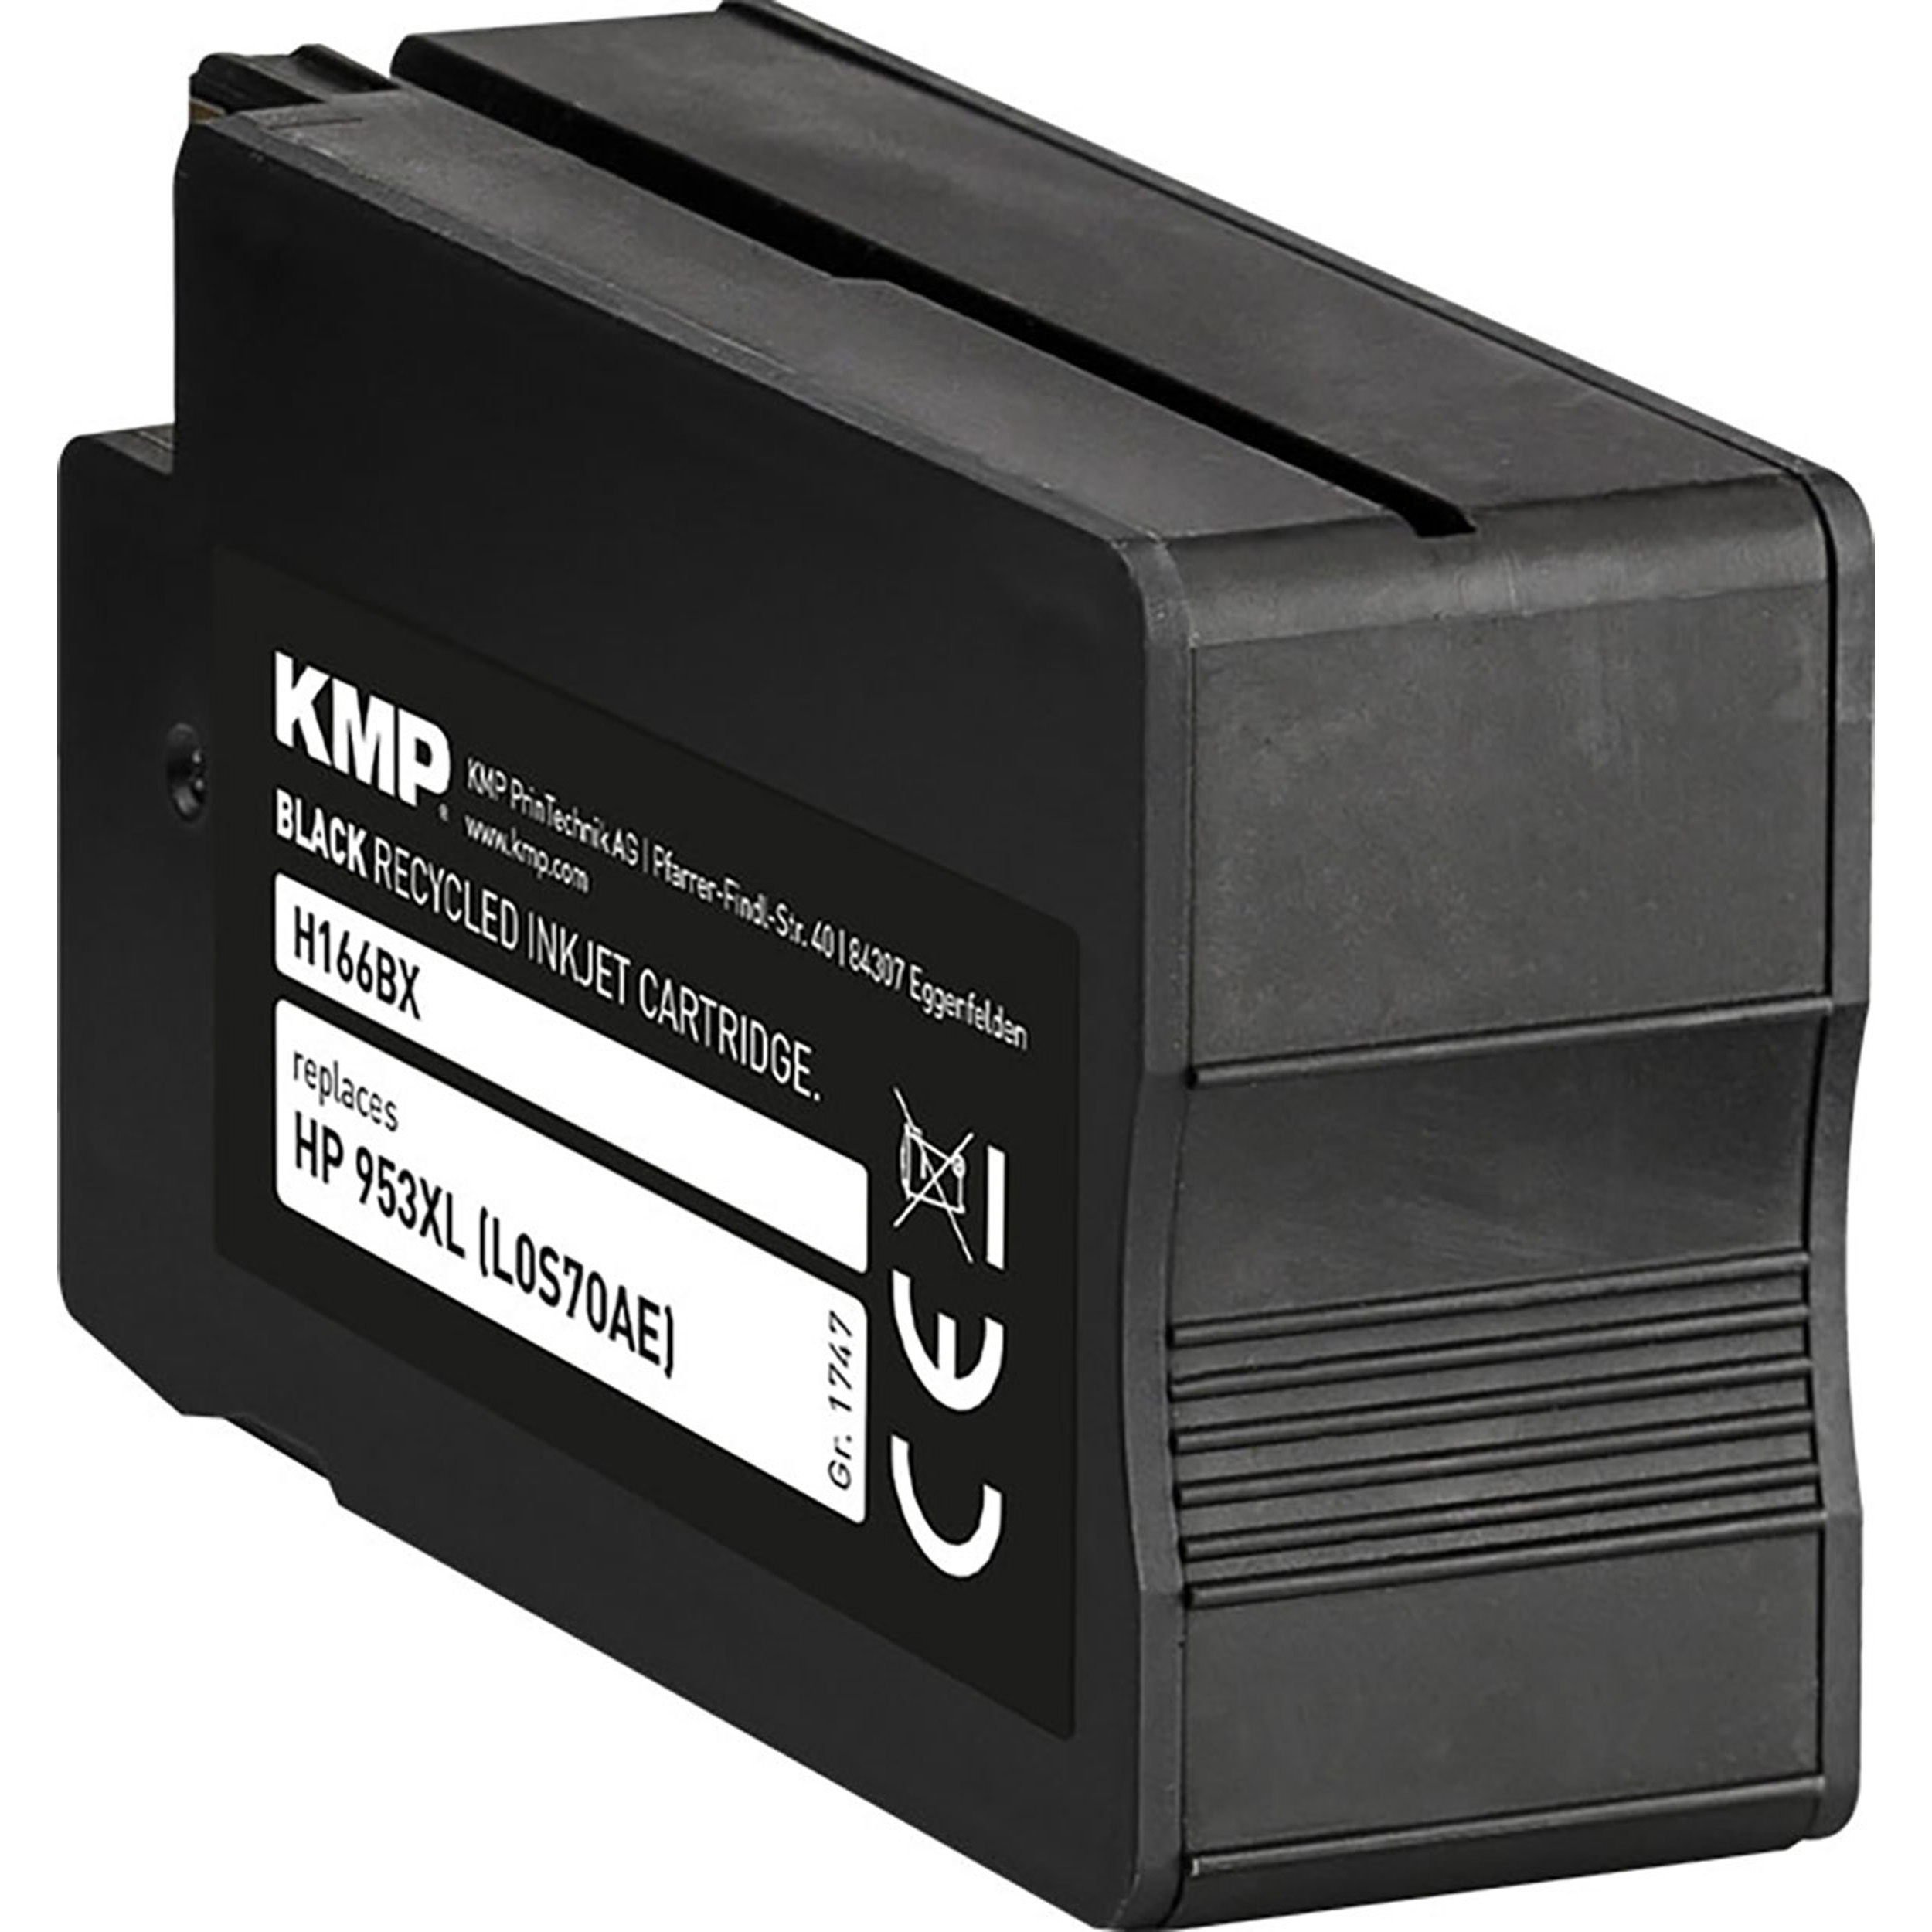 KMP Tintenpatrone für HP 953XL Cartridge (L0S70AE) Black (L0S70AE) schwarz Ink